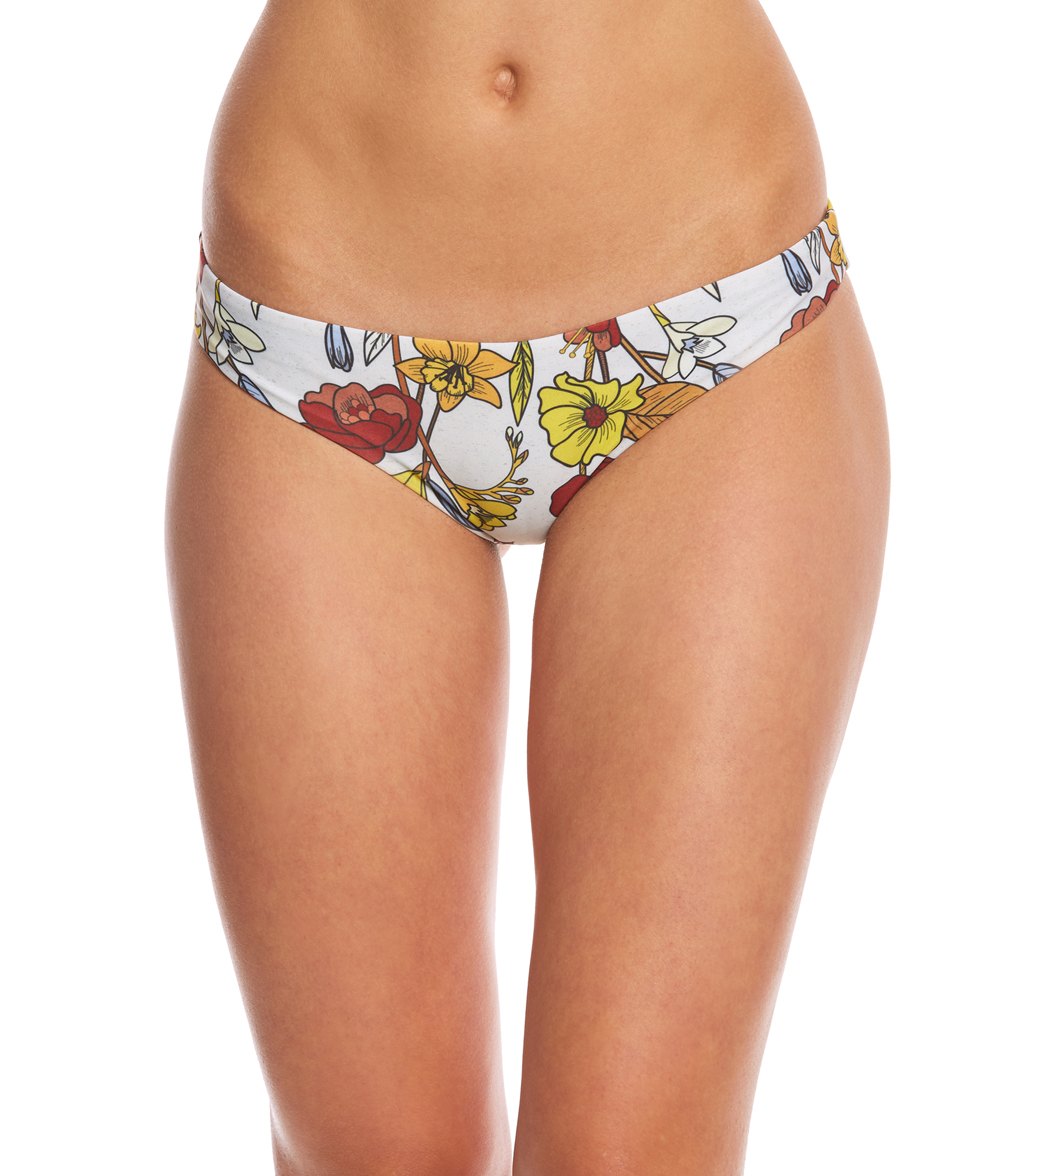 Stone Fox Swim Wild Flowers Malibu Bikini Bottom - Large - Swimoutlet.com